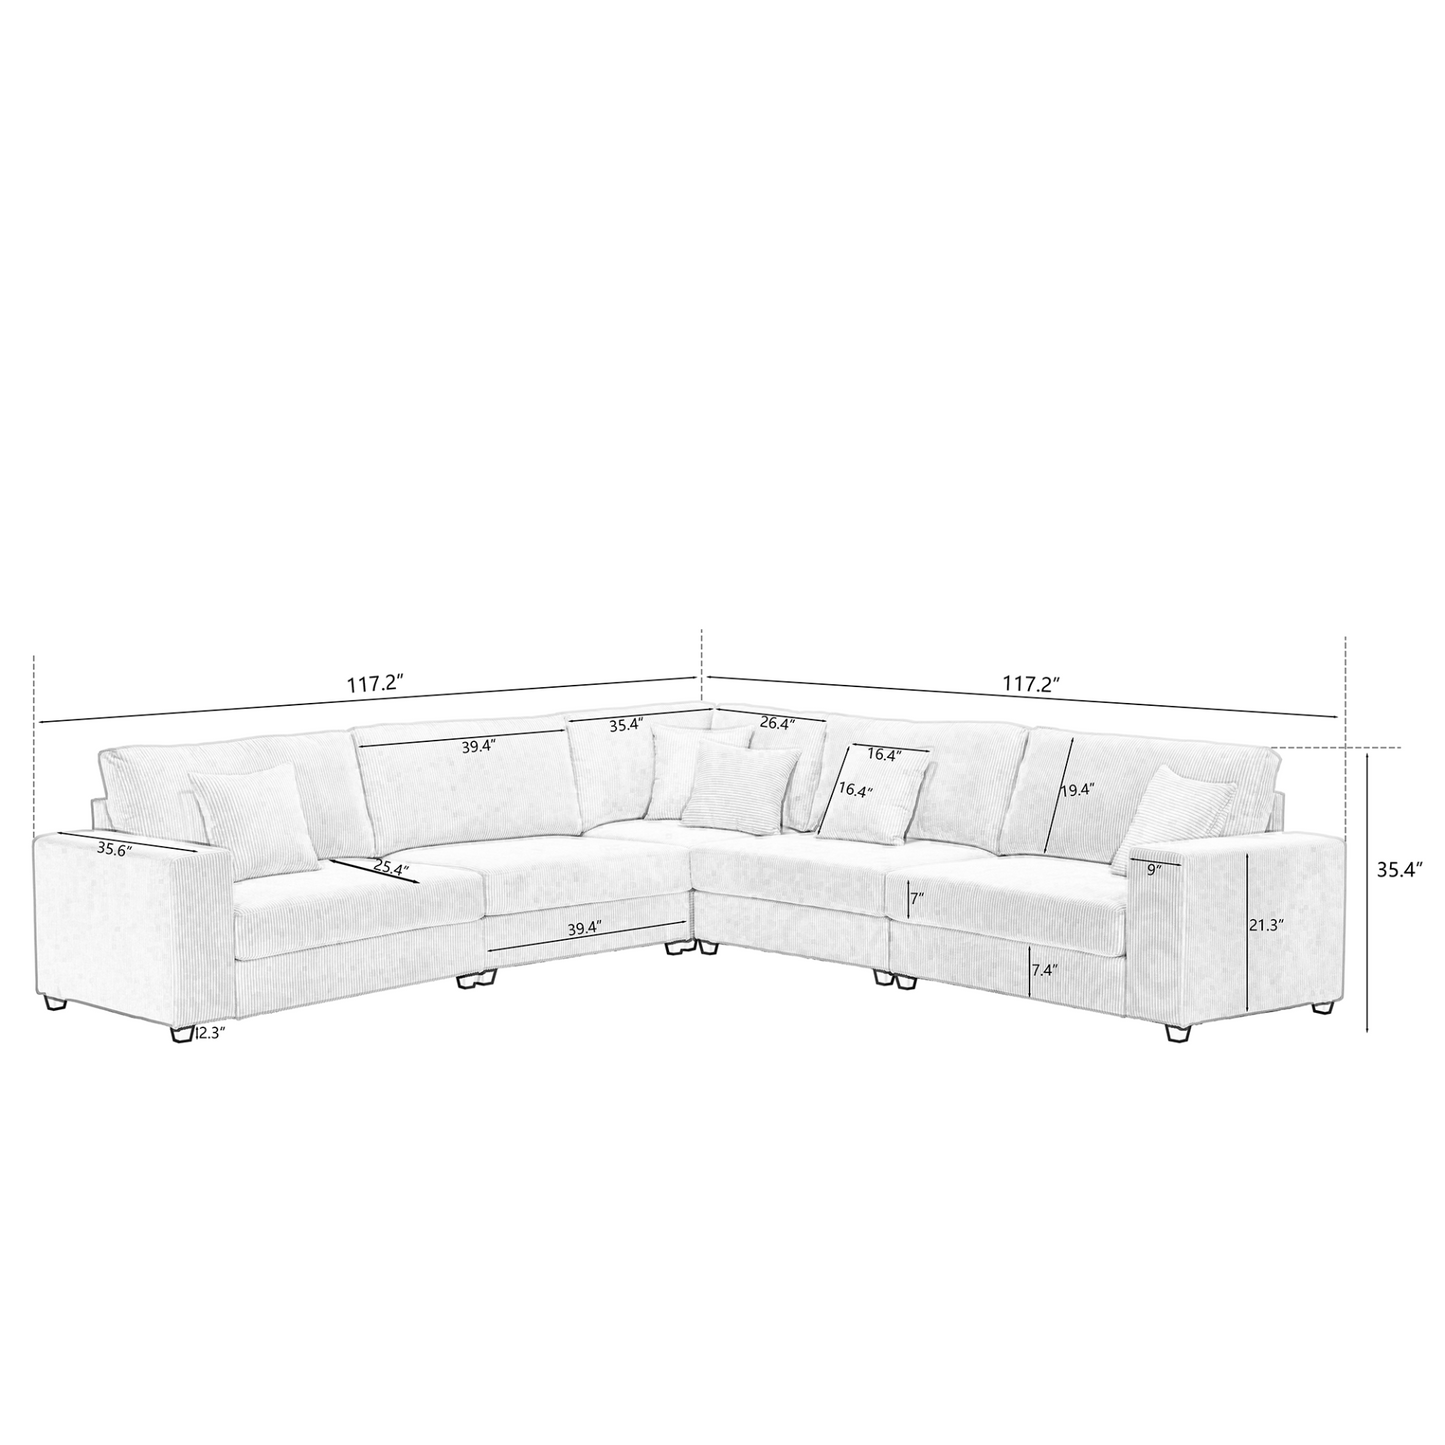 Oversized Modular Sectional Sofa Set,Corduroy Upholstered Deep Seat Comfy Sofa   Beige, Goodies N Stuff